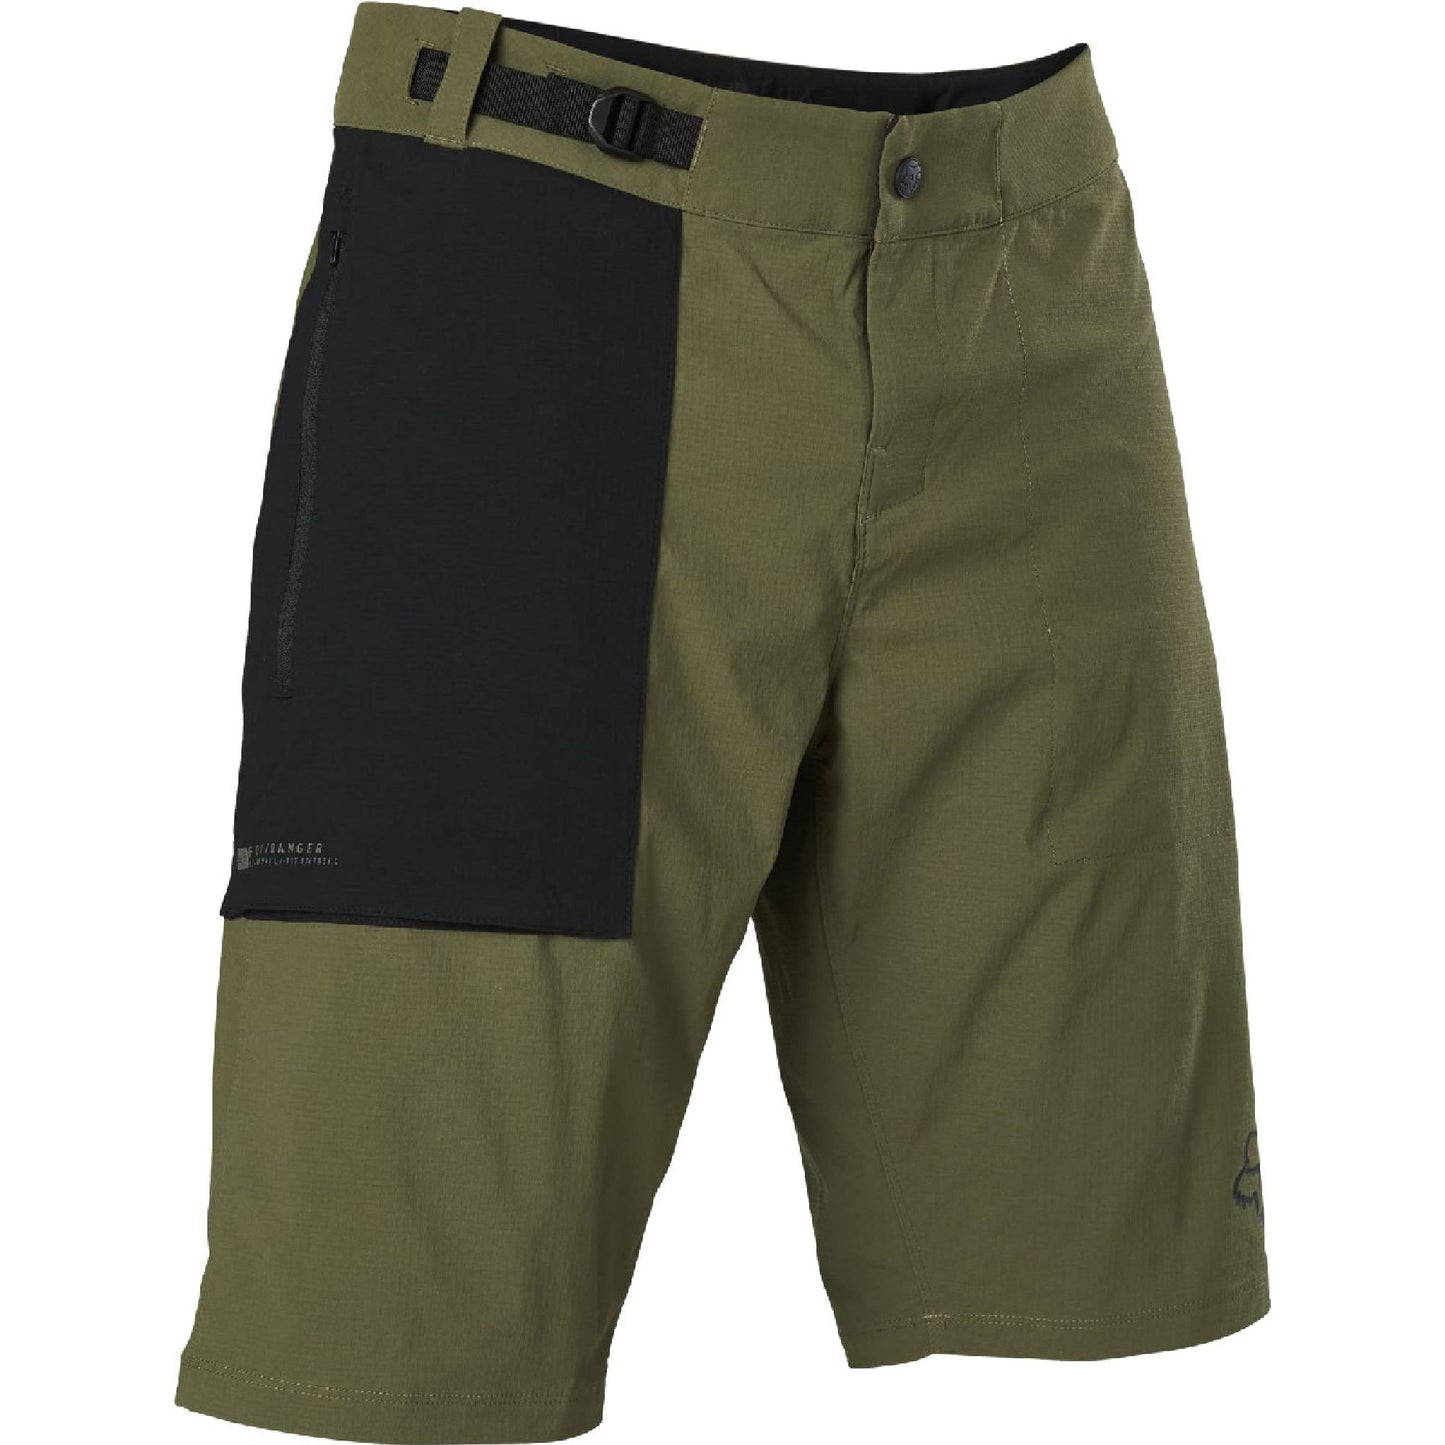 Fox Ranger Utility Short Olive Green 28879-099-36 Bike Shorts